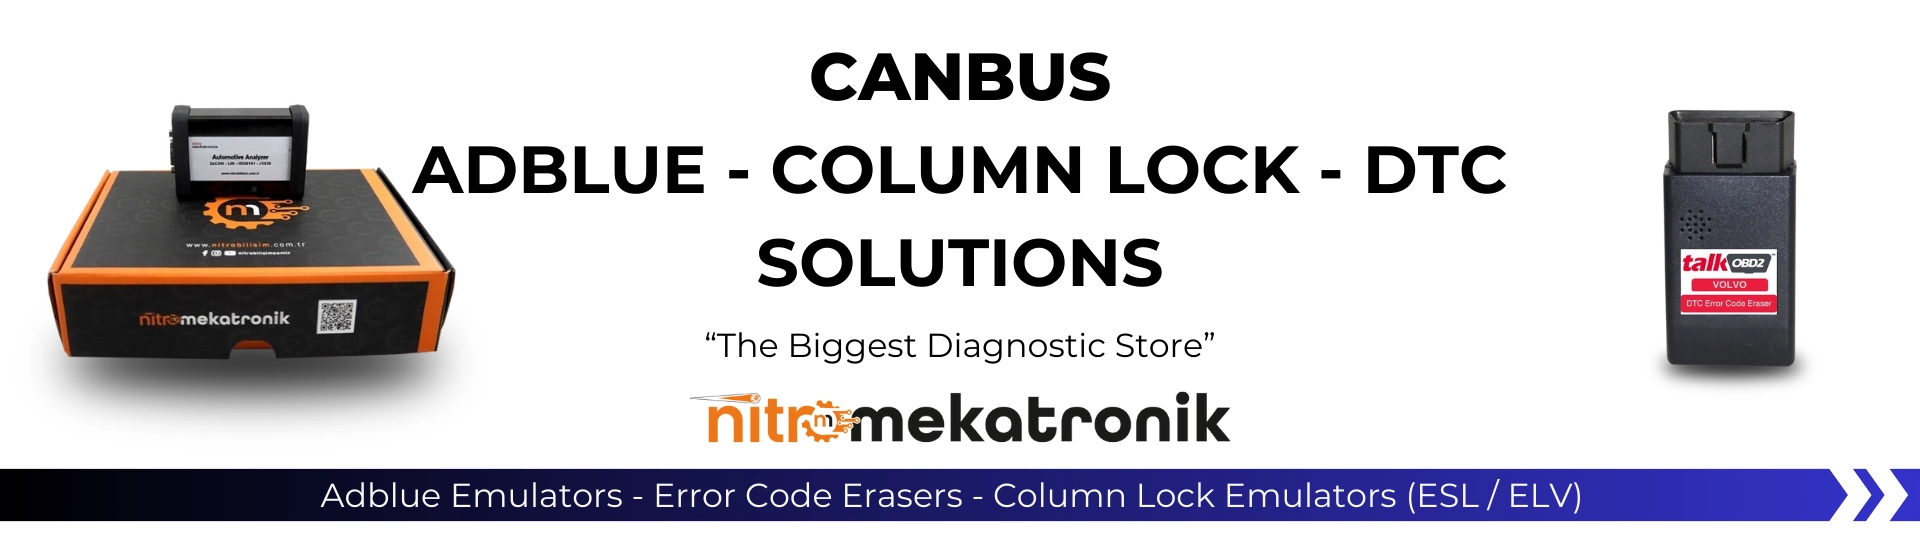 canbus-adblue-column-lock-dtc-solutions-en